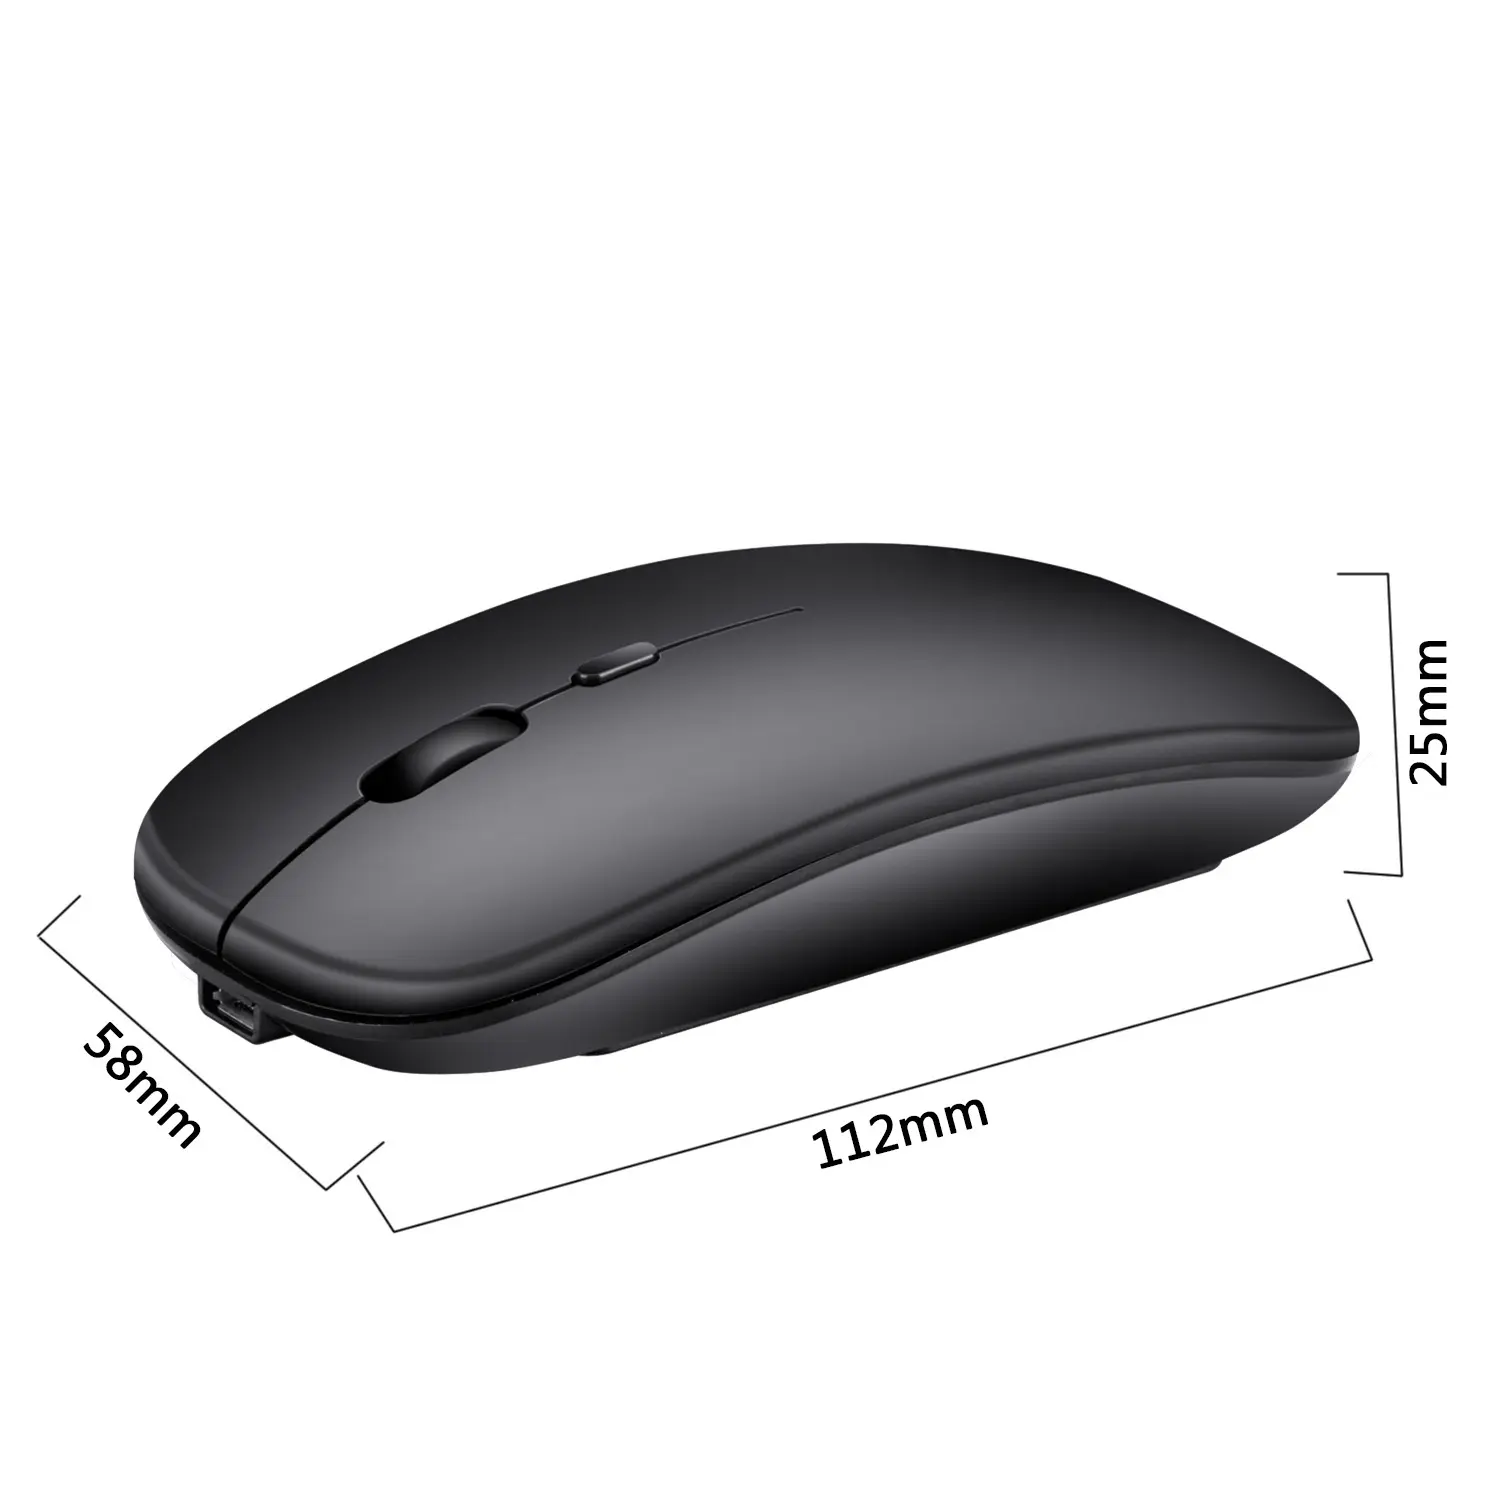 Mouse gaming nirkabel 2.4Ghz, mouse gaming murah pabrik untuk PC laptop tablet LOGO dapat disesuaikan